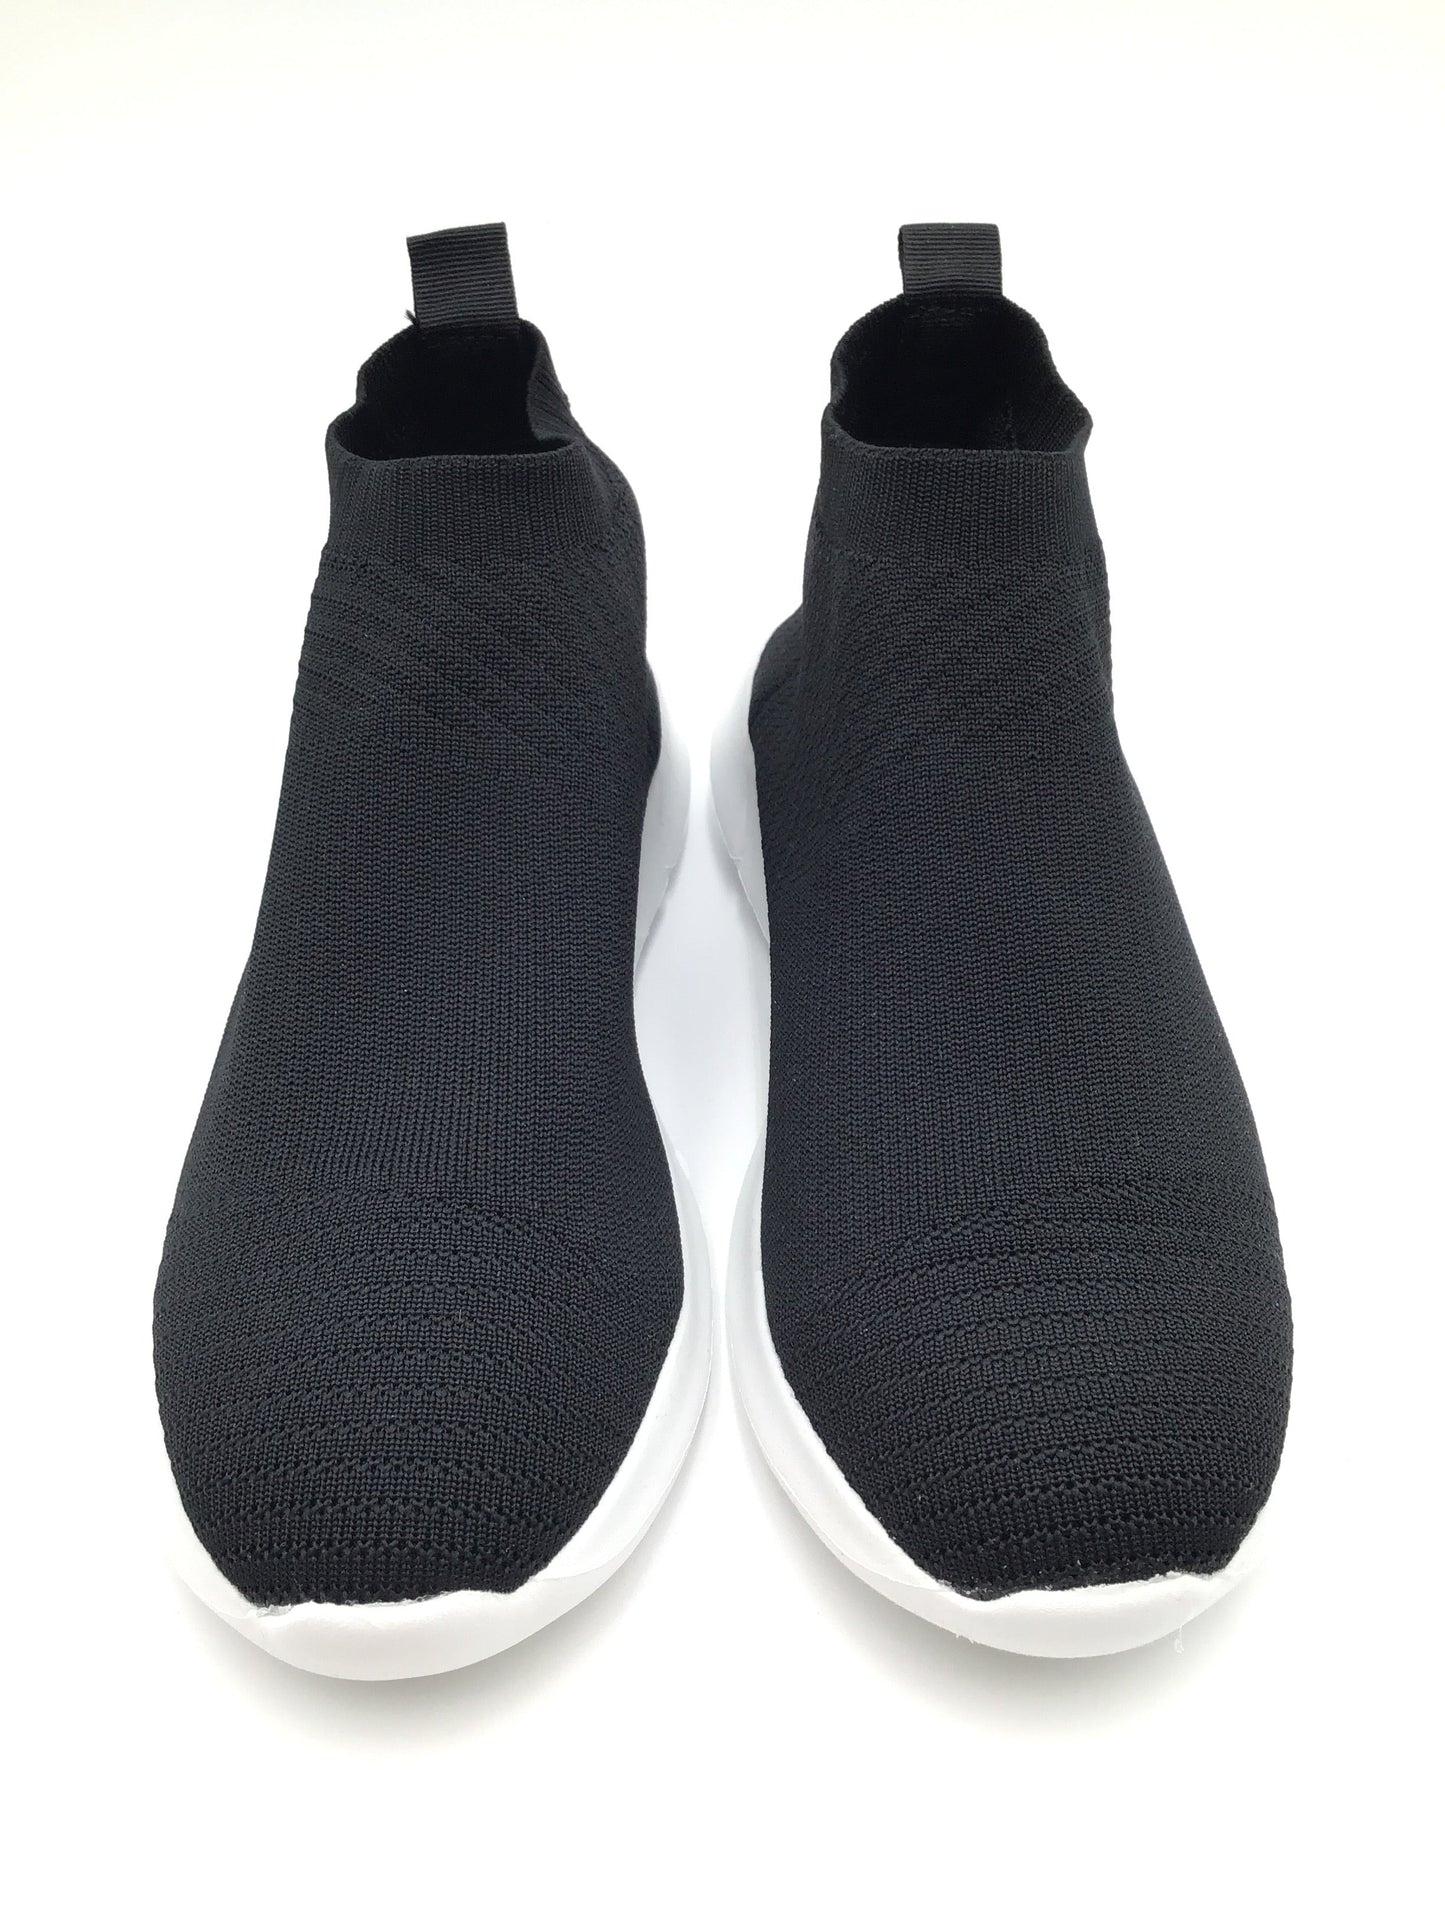 Black & White Shoes Sneakers Steve Madden, Size 9.5